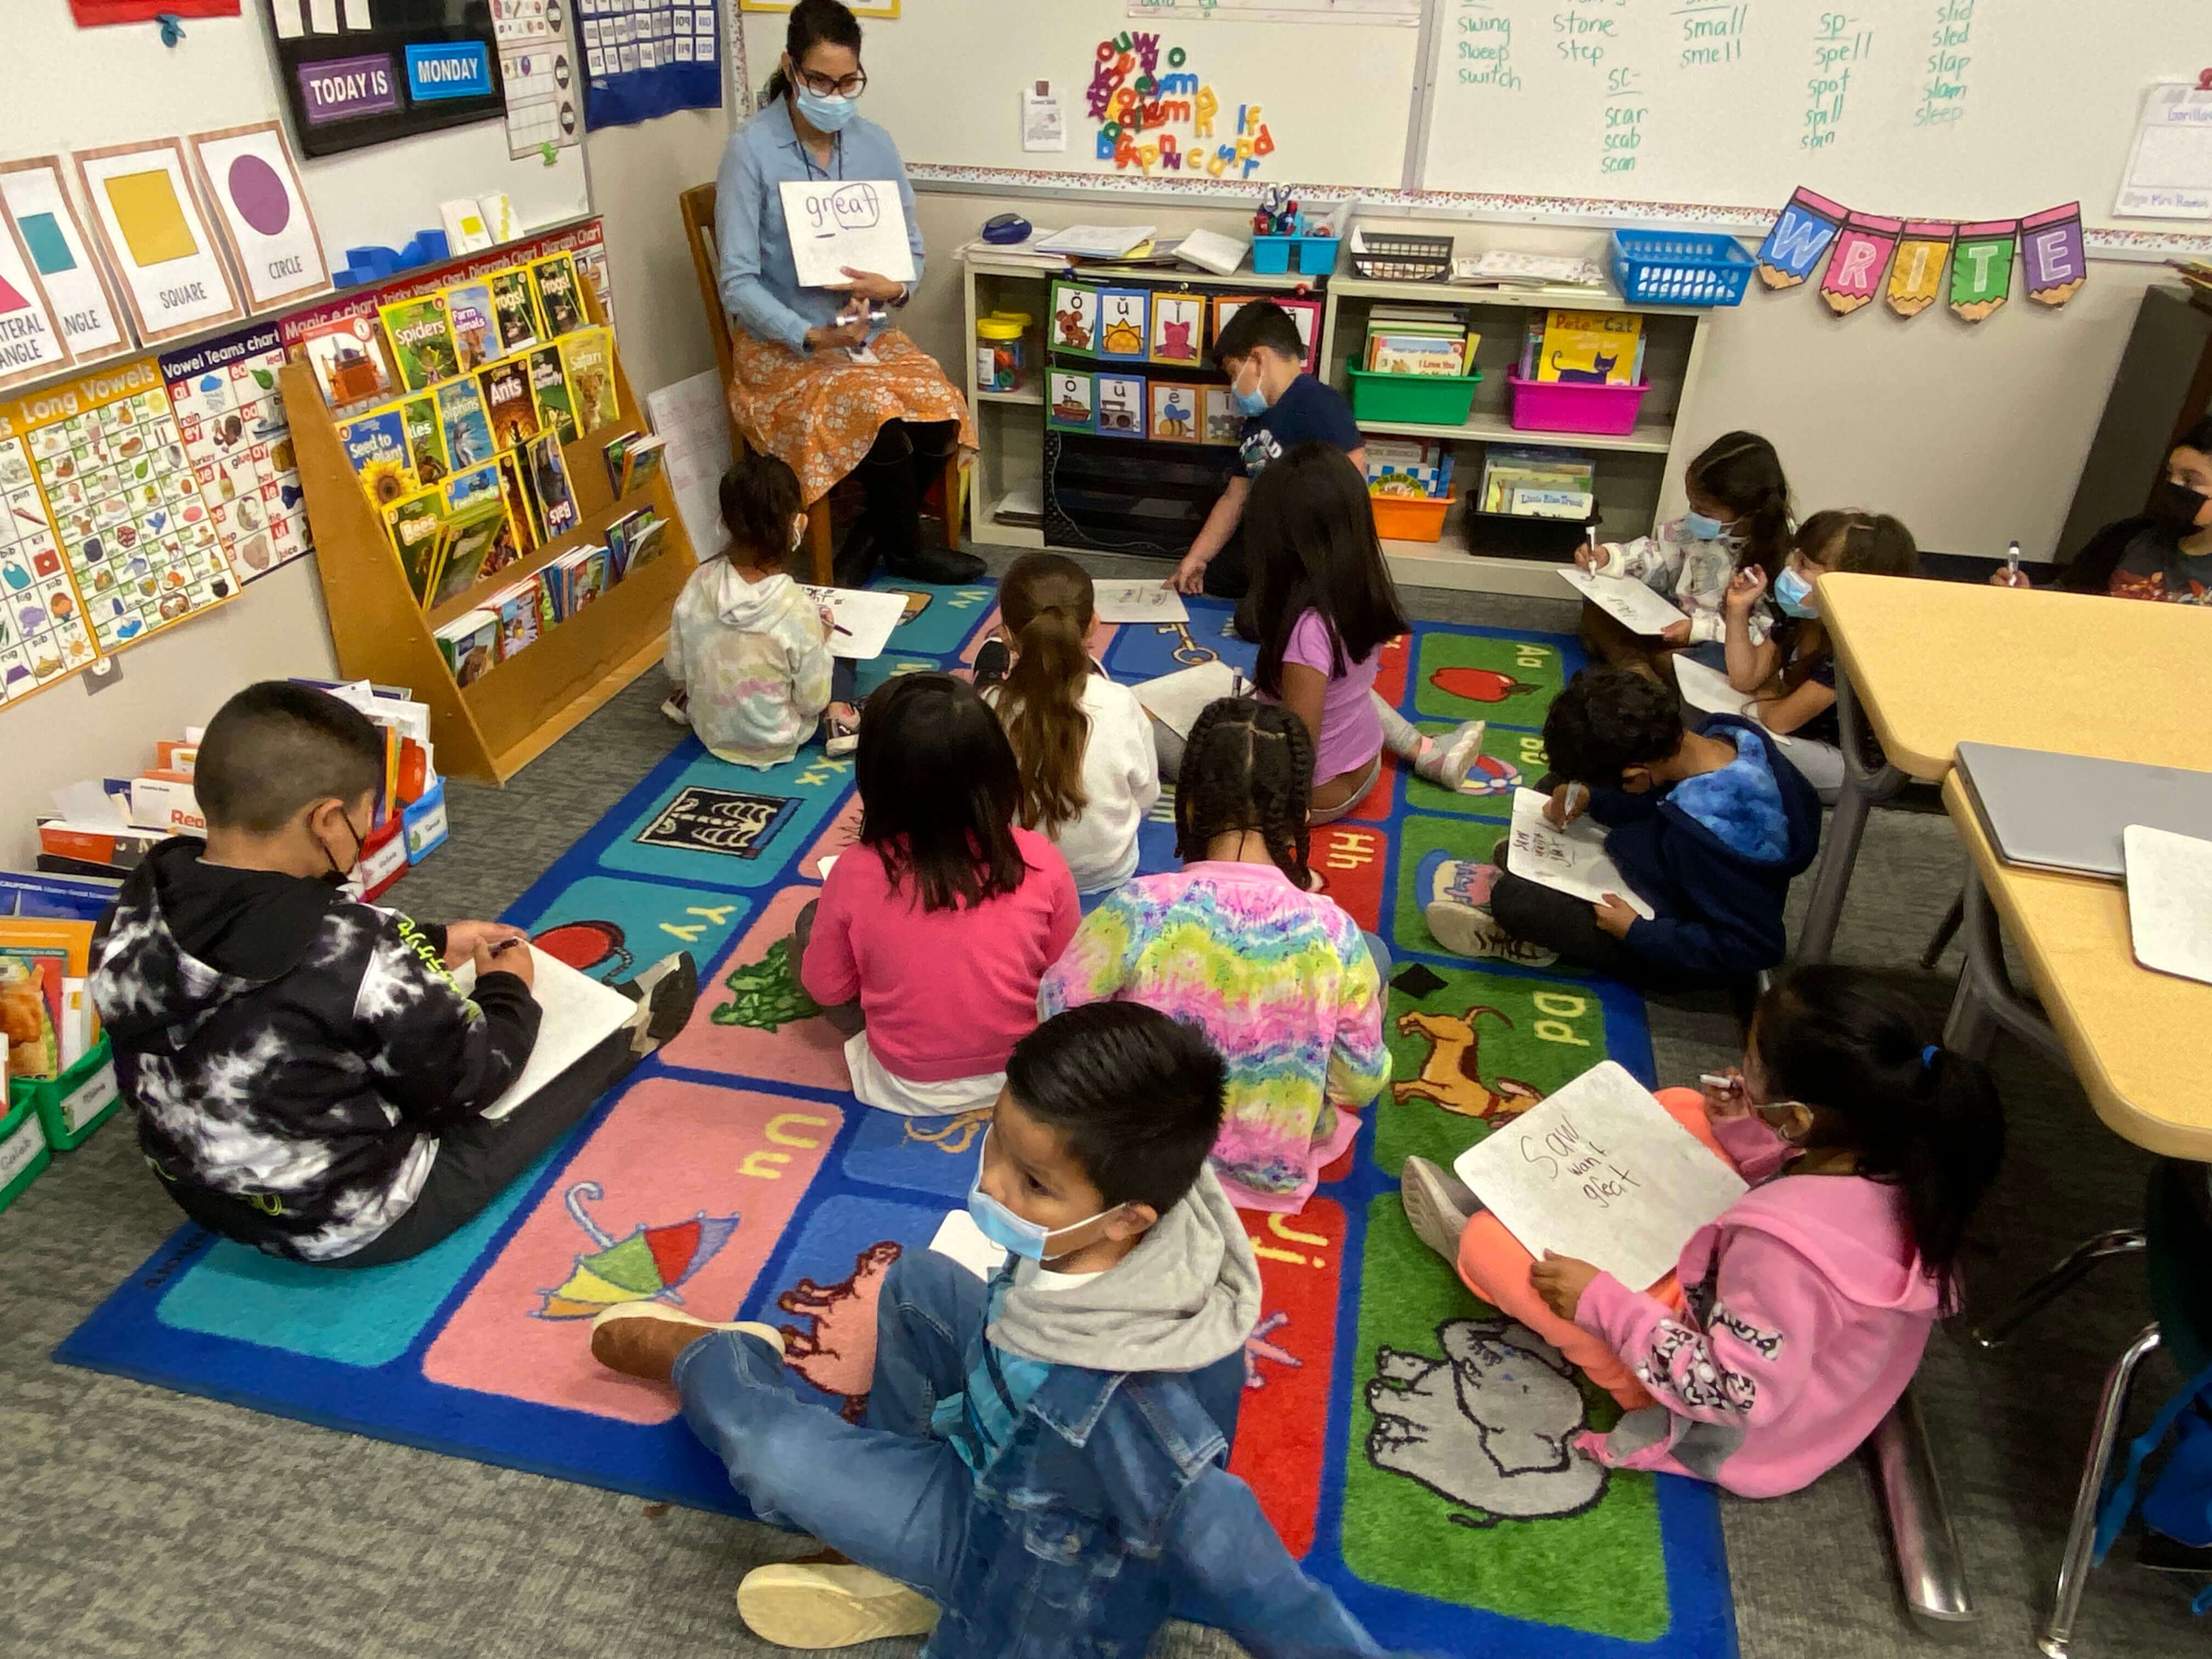 students in classroom on alphabet carpet doing homework